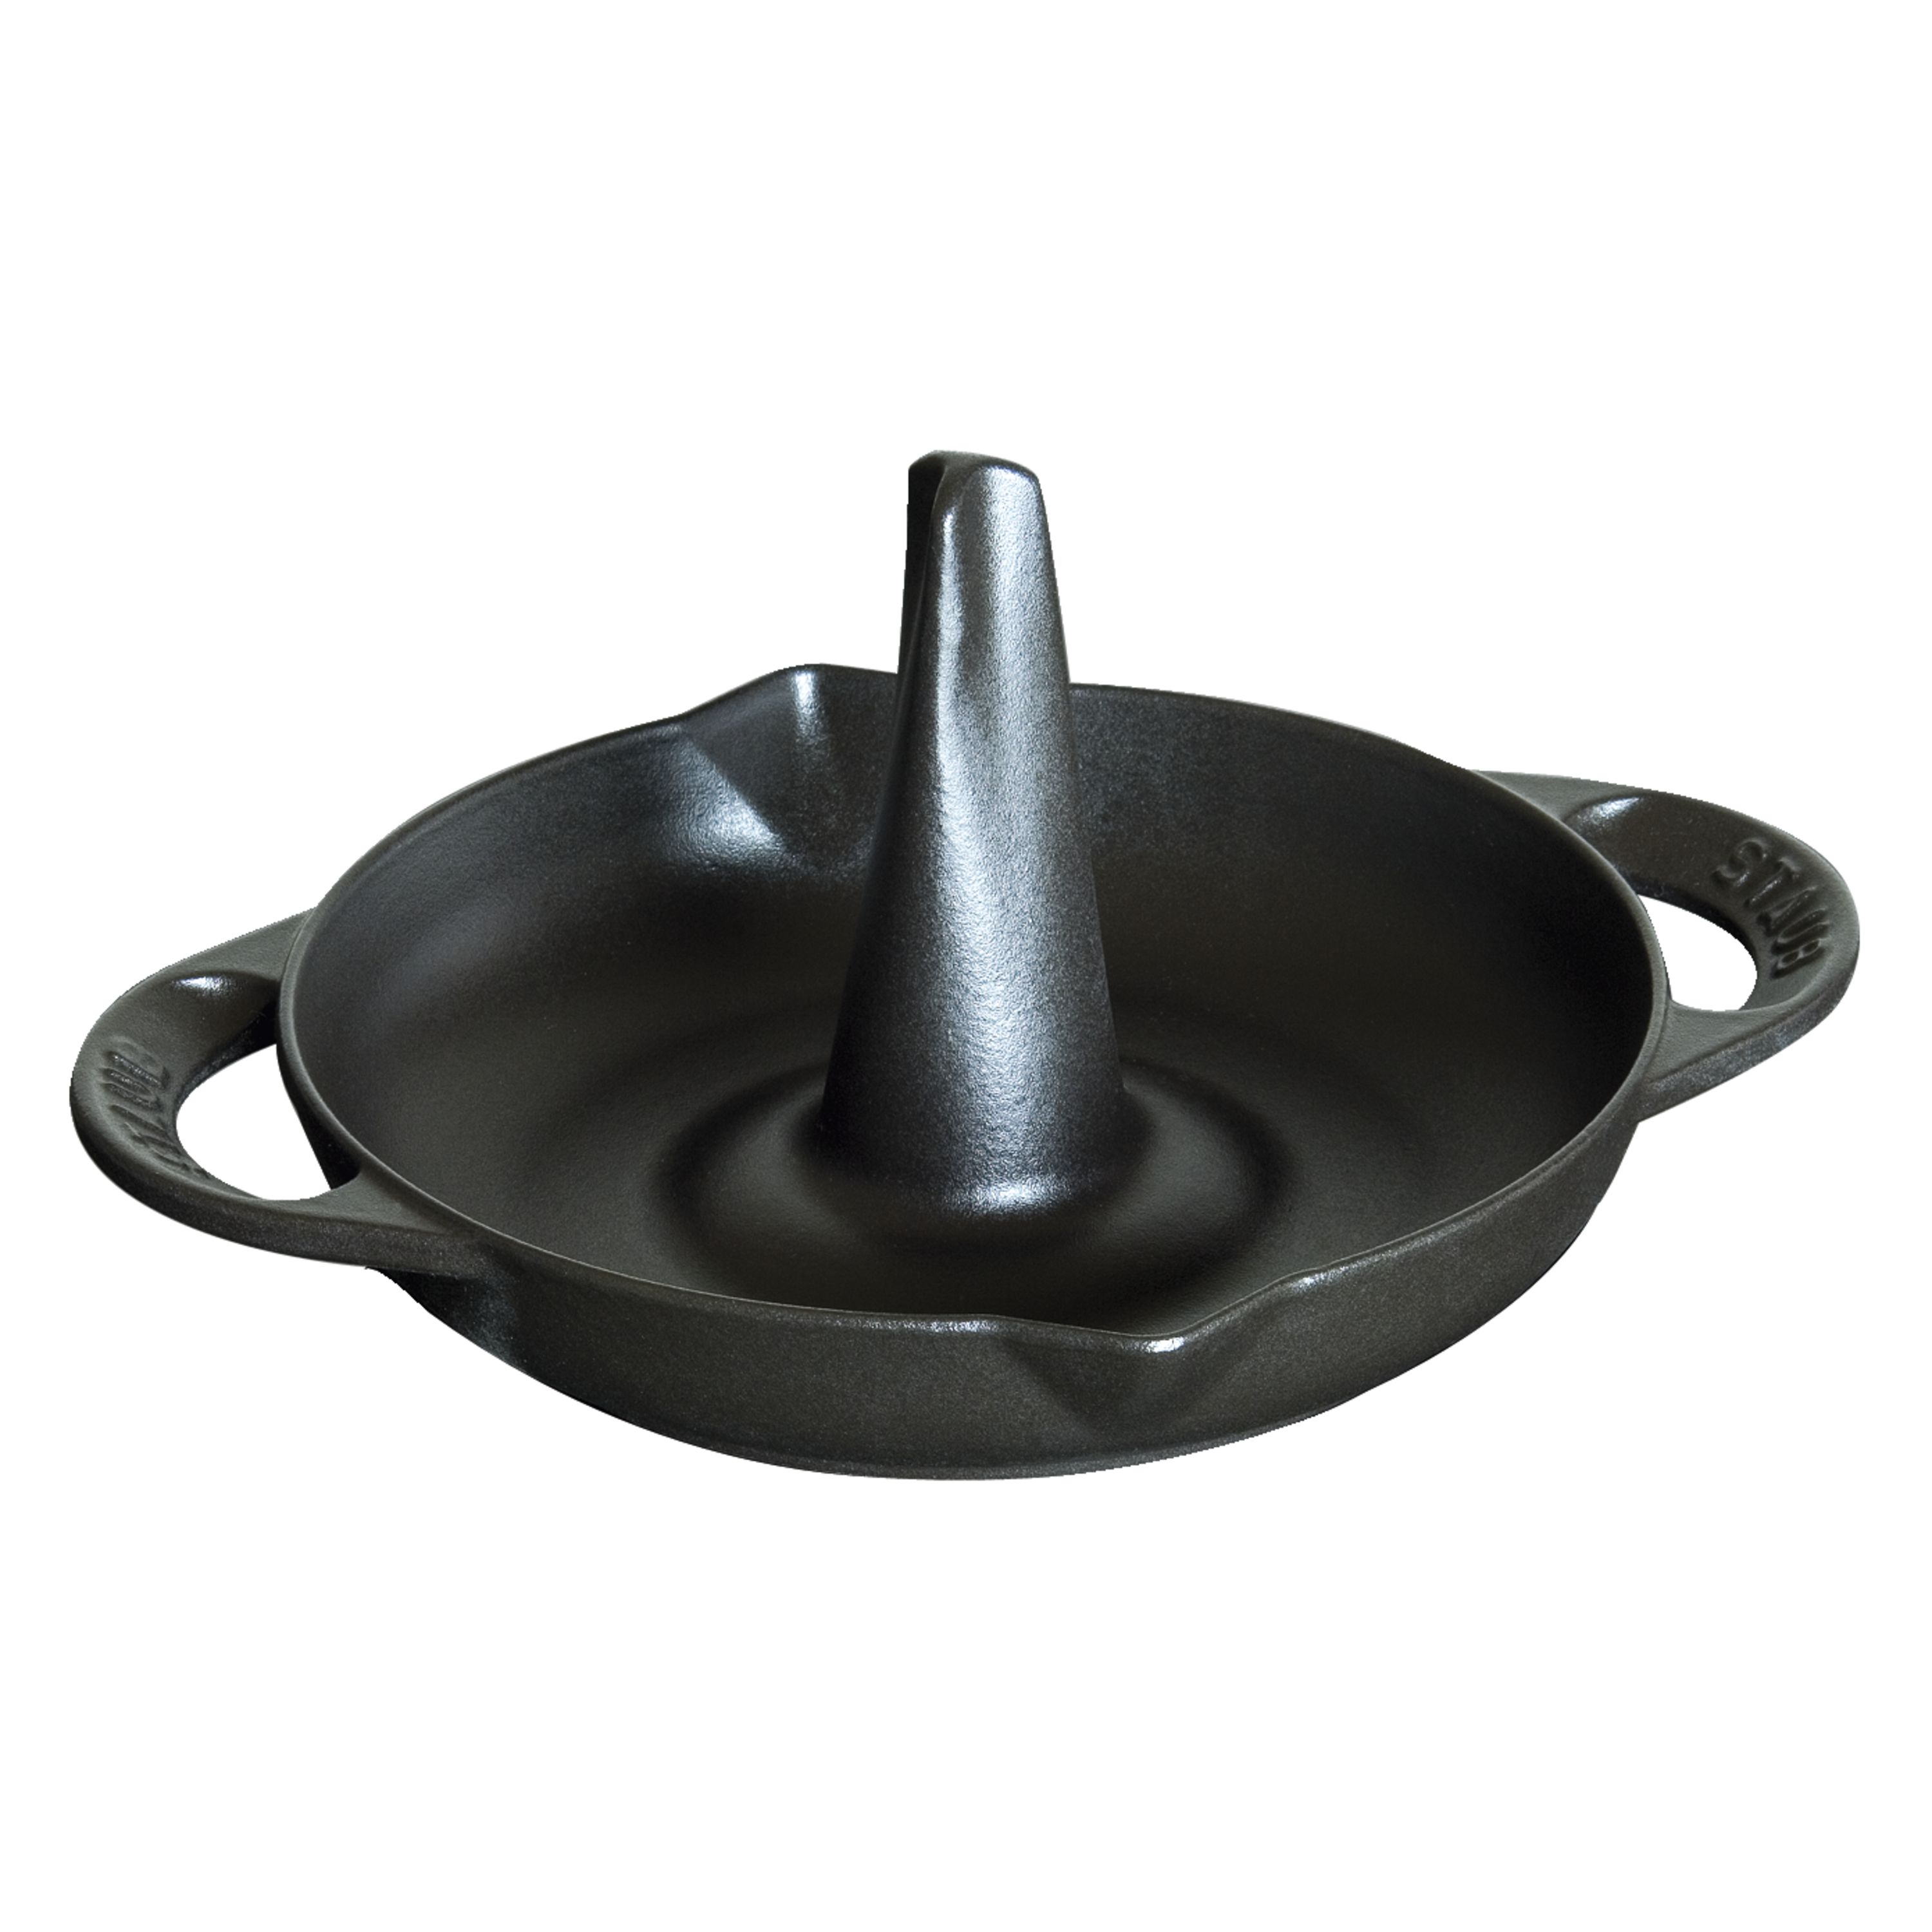 Staub Cast Iron Oval Roasting Pans & Casserole Dishes, 2 Sizes, Enameled on  Food52